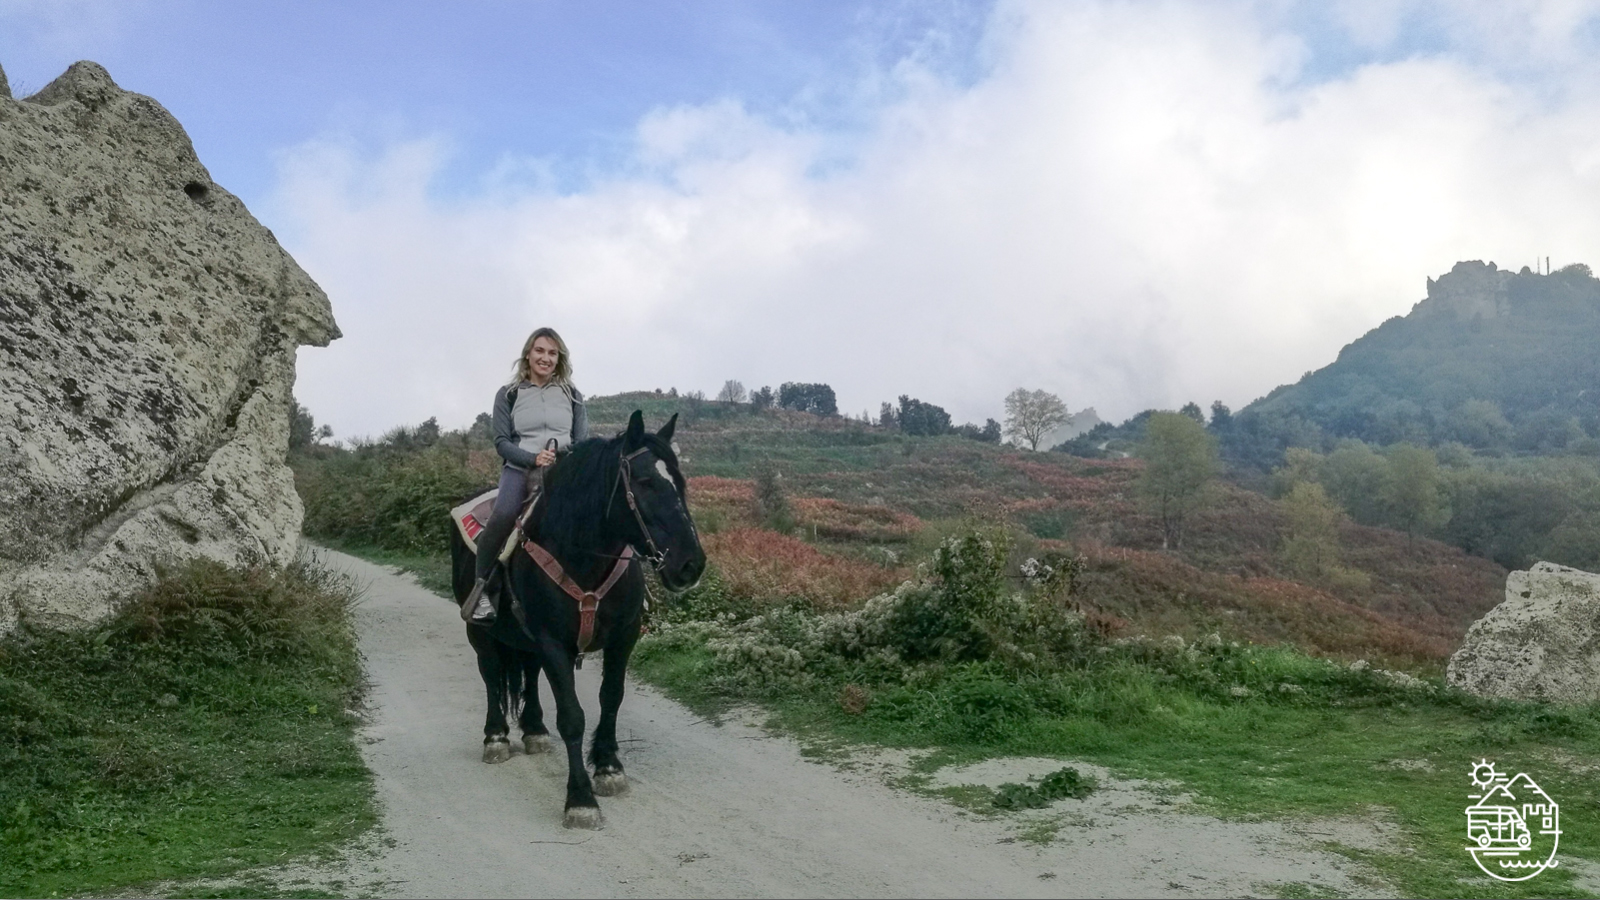 Horse riding in Ischia, horseback riding in Ischia, Ischia horse trek, Ischia horse tours, Horseback excursion in Ischia, Ischia stable, Ischia horsetrek, Ischia horse ride tour, Tour of Ischia, Ischia trekking, Ischia horse excursion